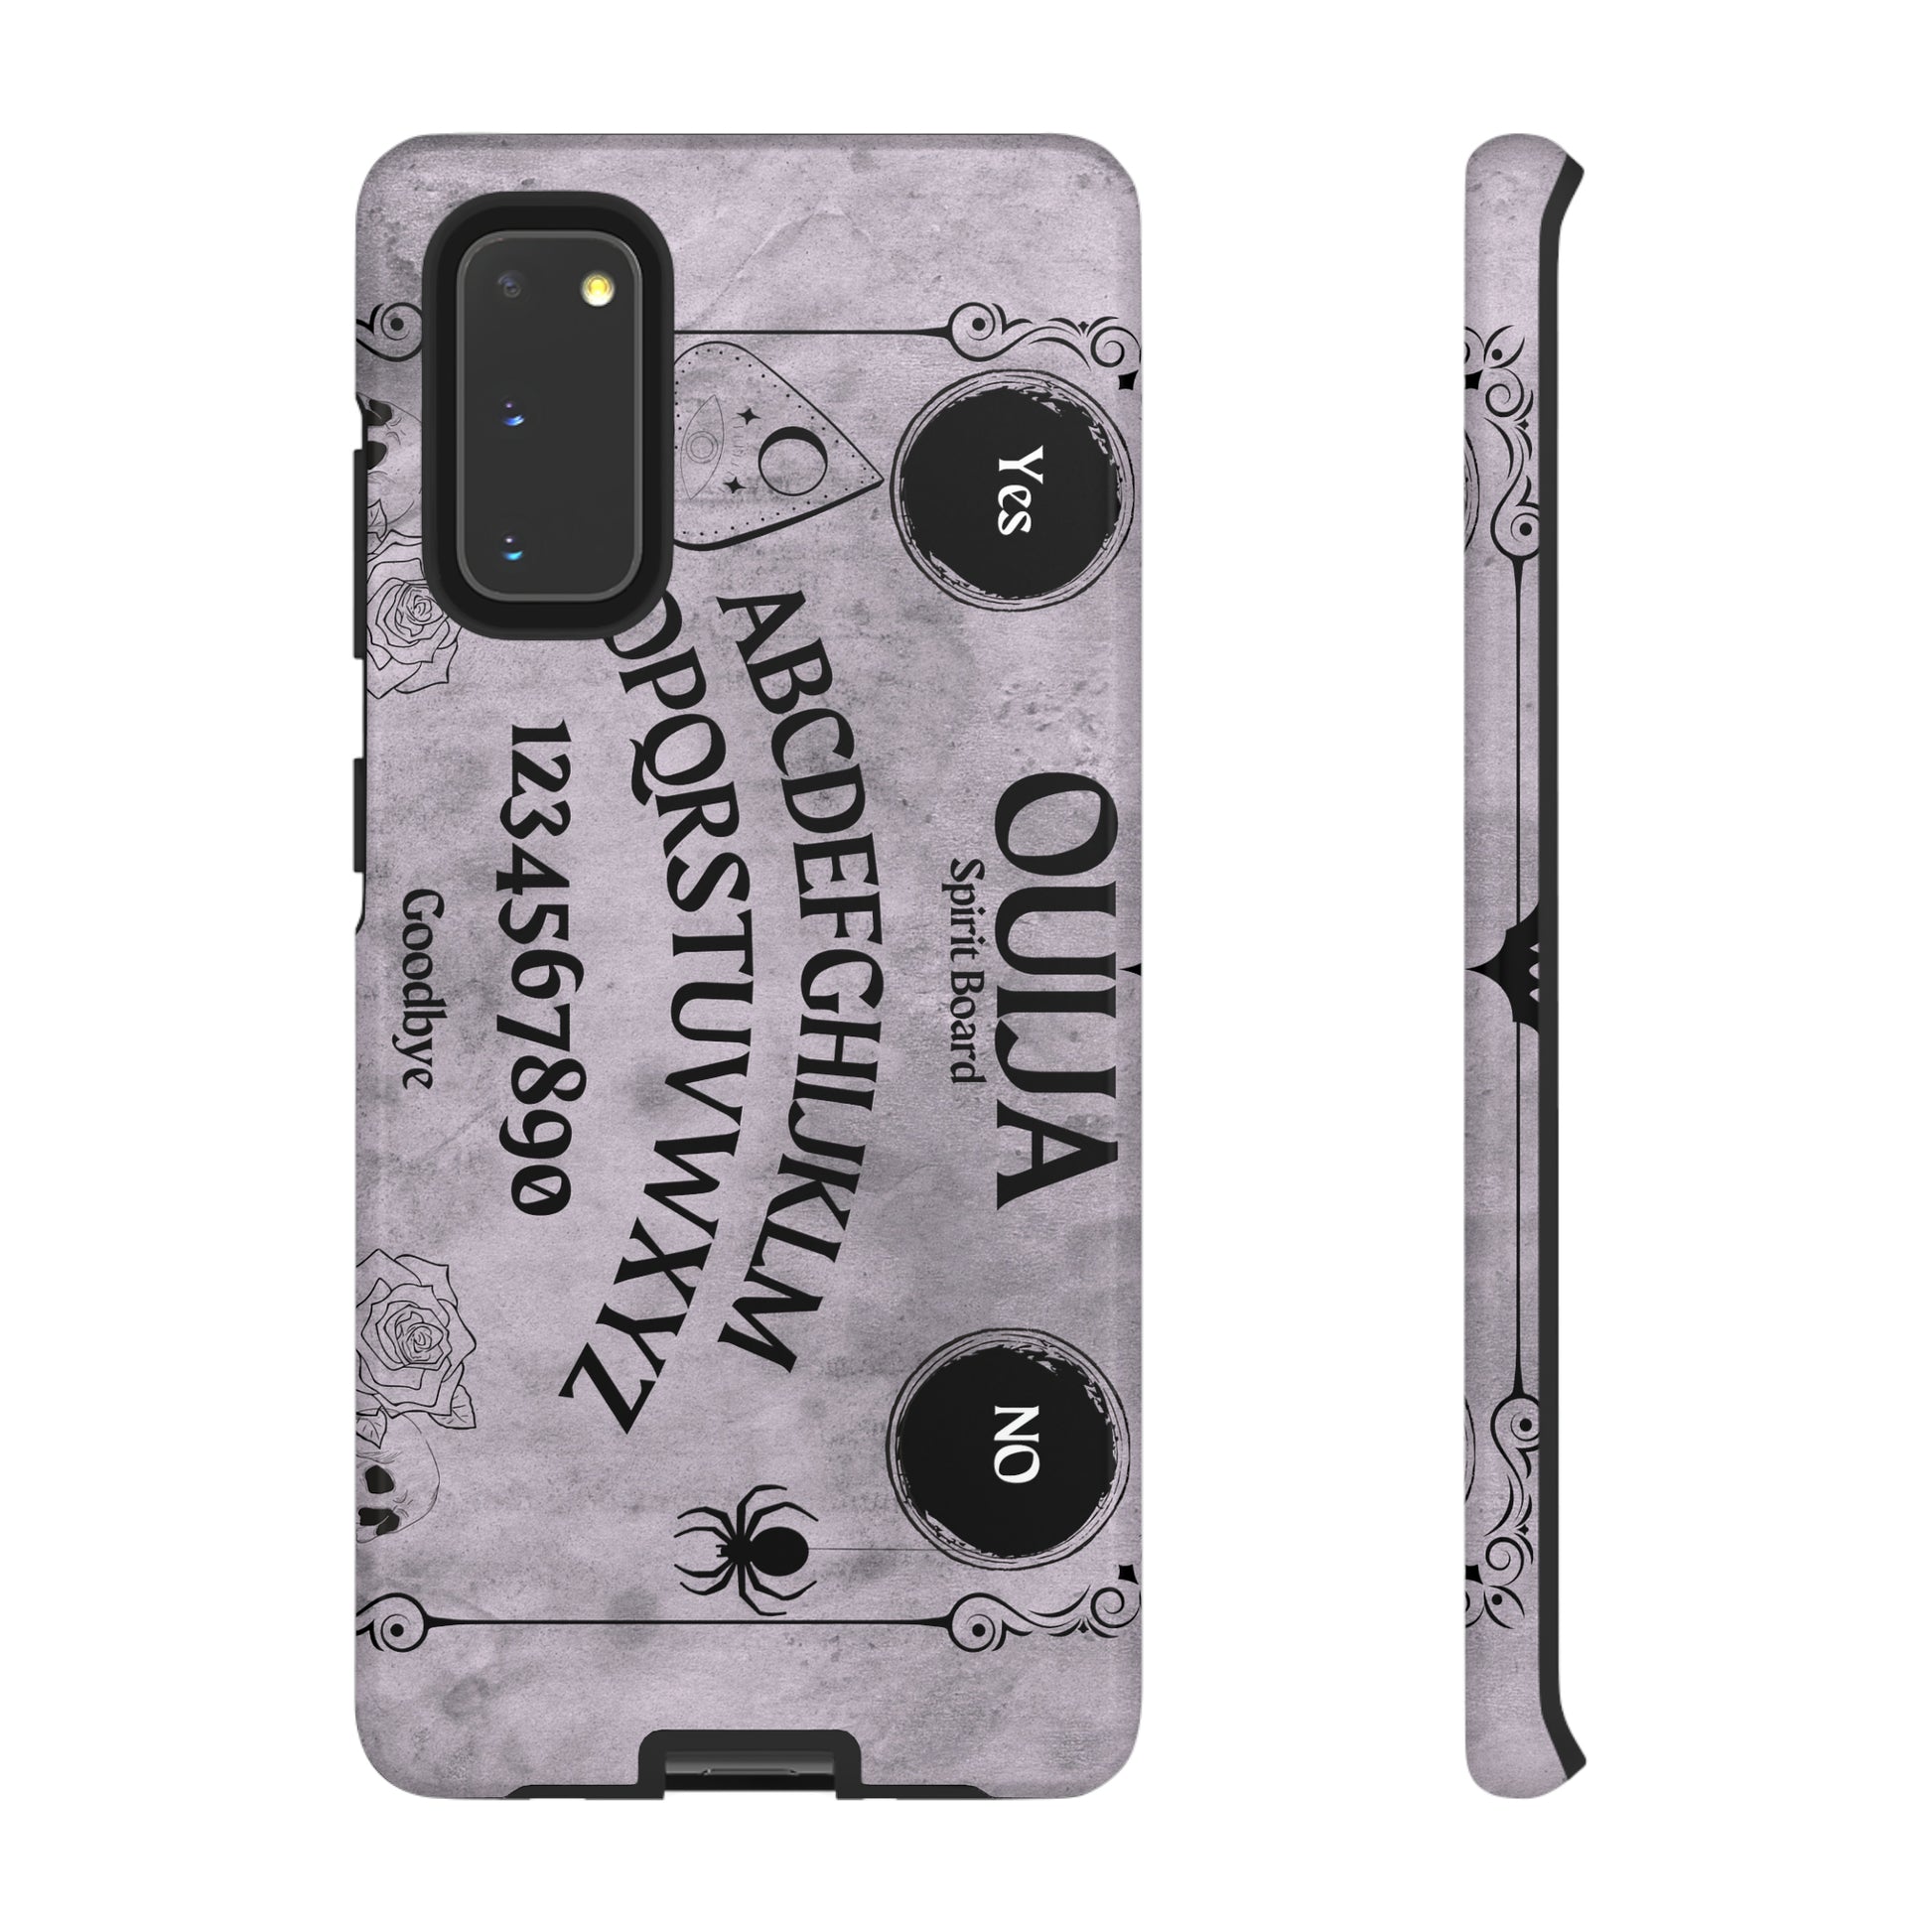 Ouija Board Tough Phone Cases For Samsung iPhone GooglePhone CaseVTZdesignsSamsung Galaxy S20GlossyAccessoriesGlossyhalloween